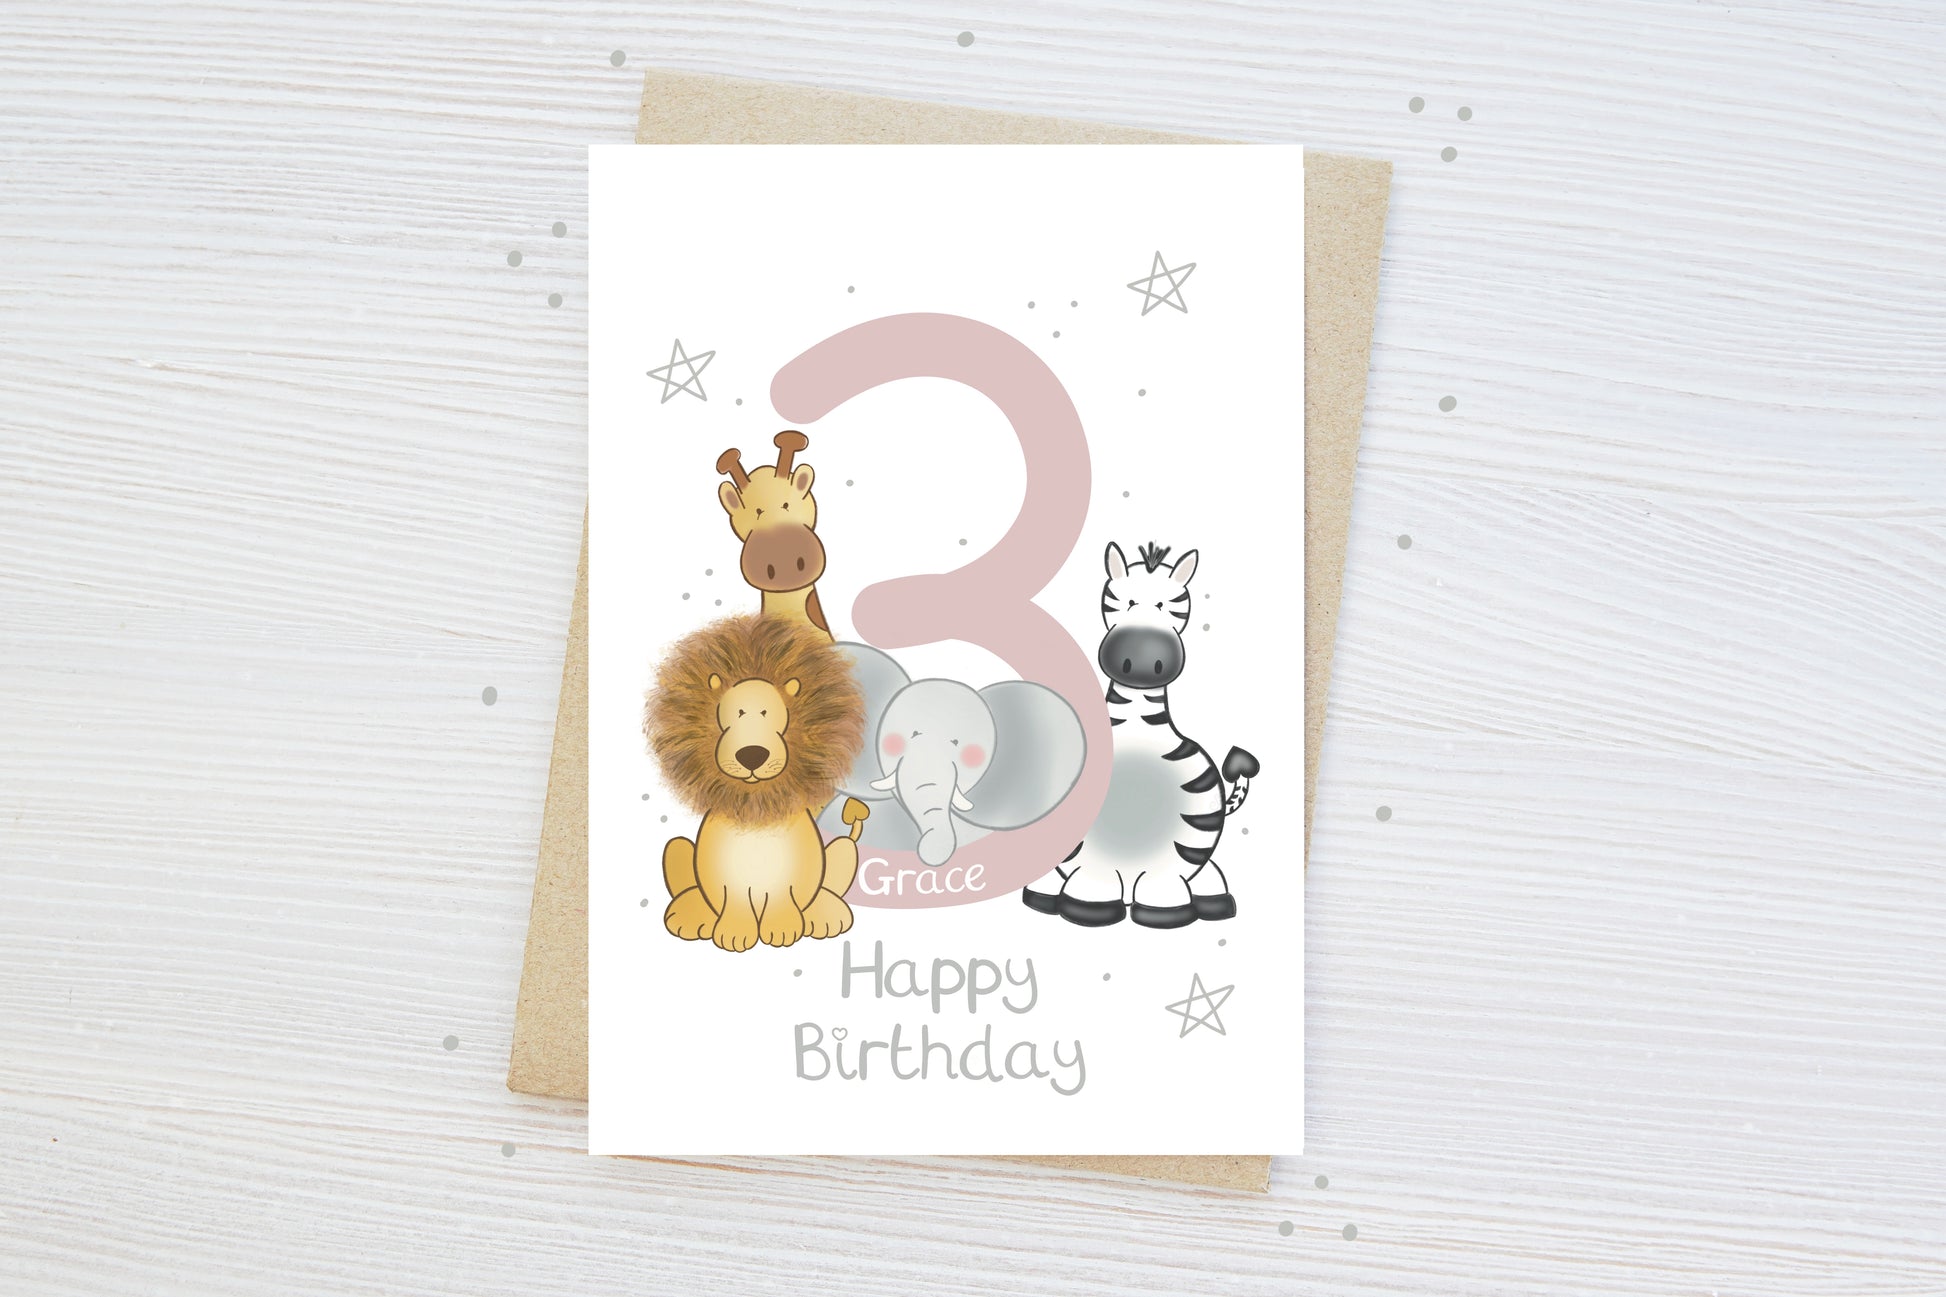 Luxury children's milestone birthday card with safari animal theme stars and 3rd happy birthday text age 3